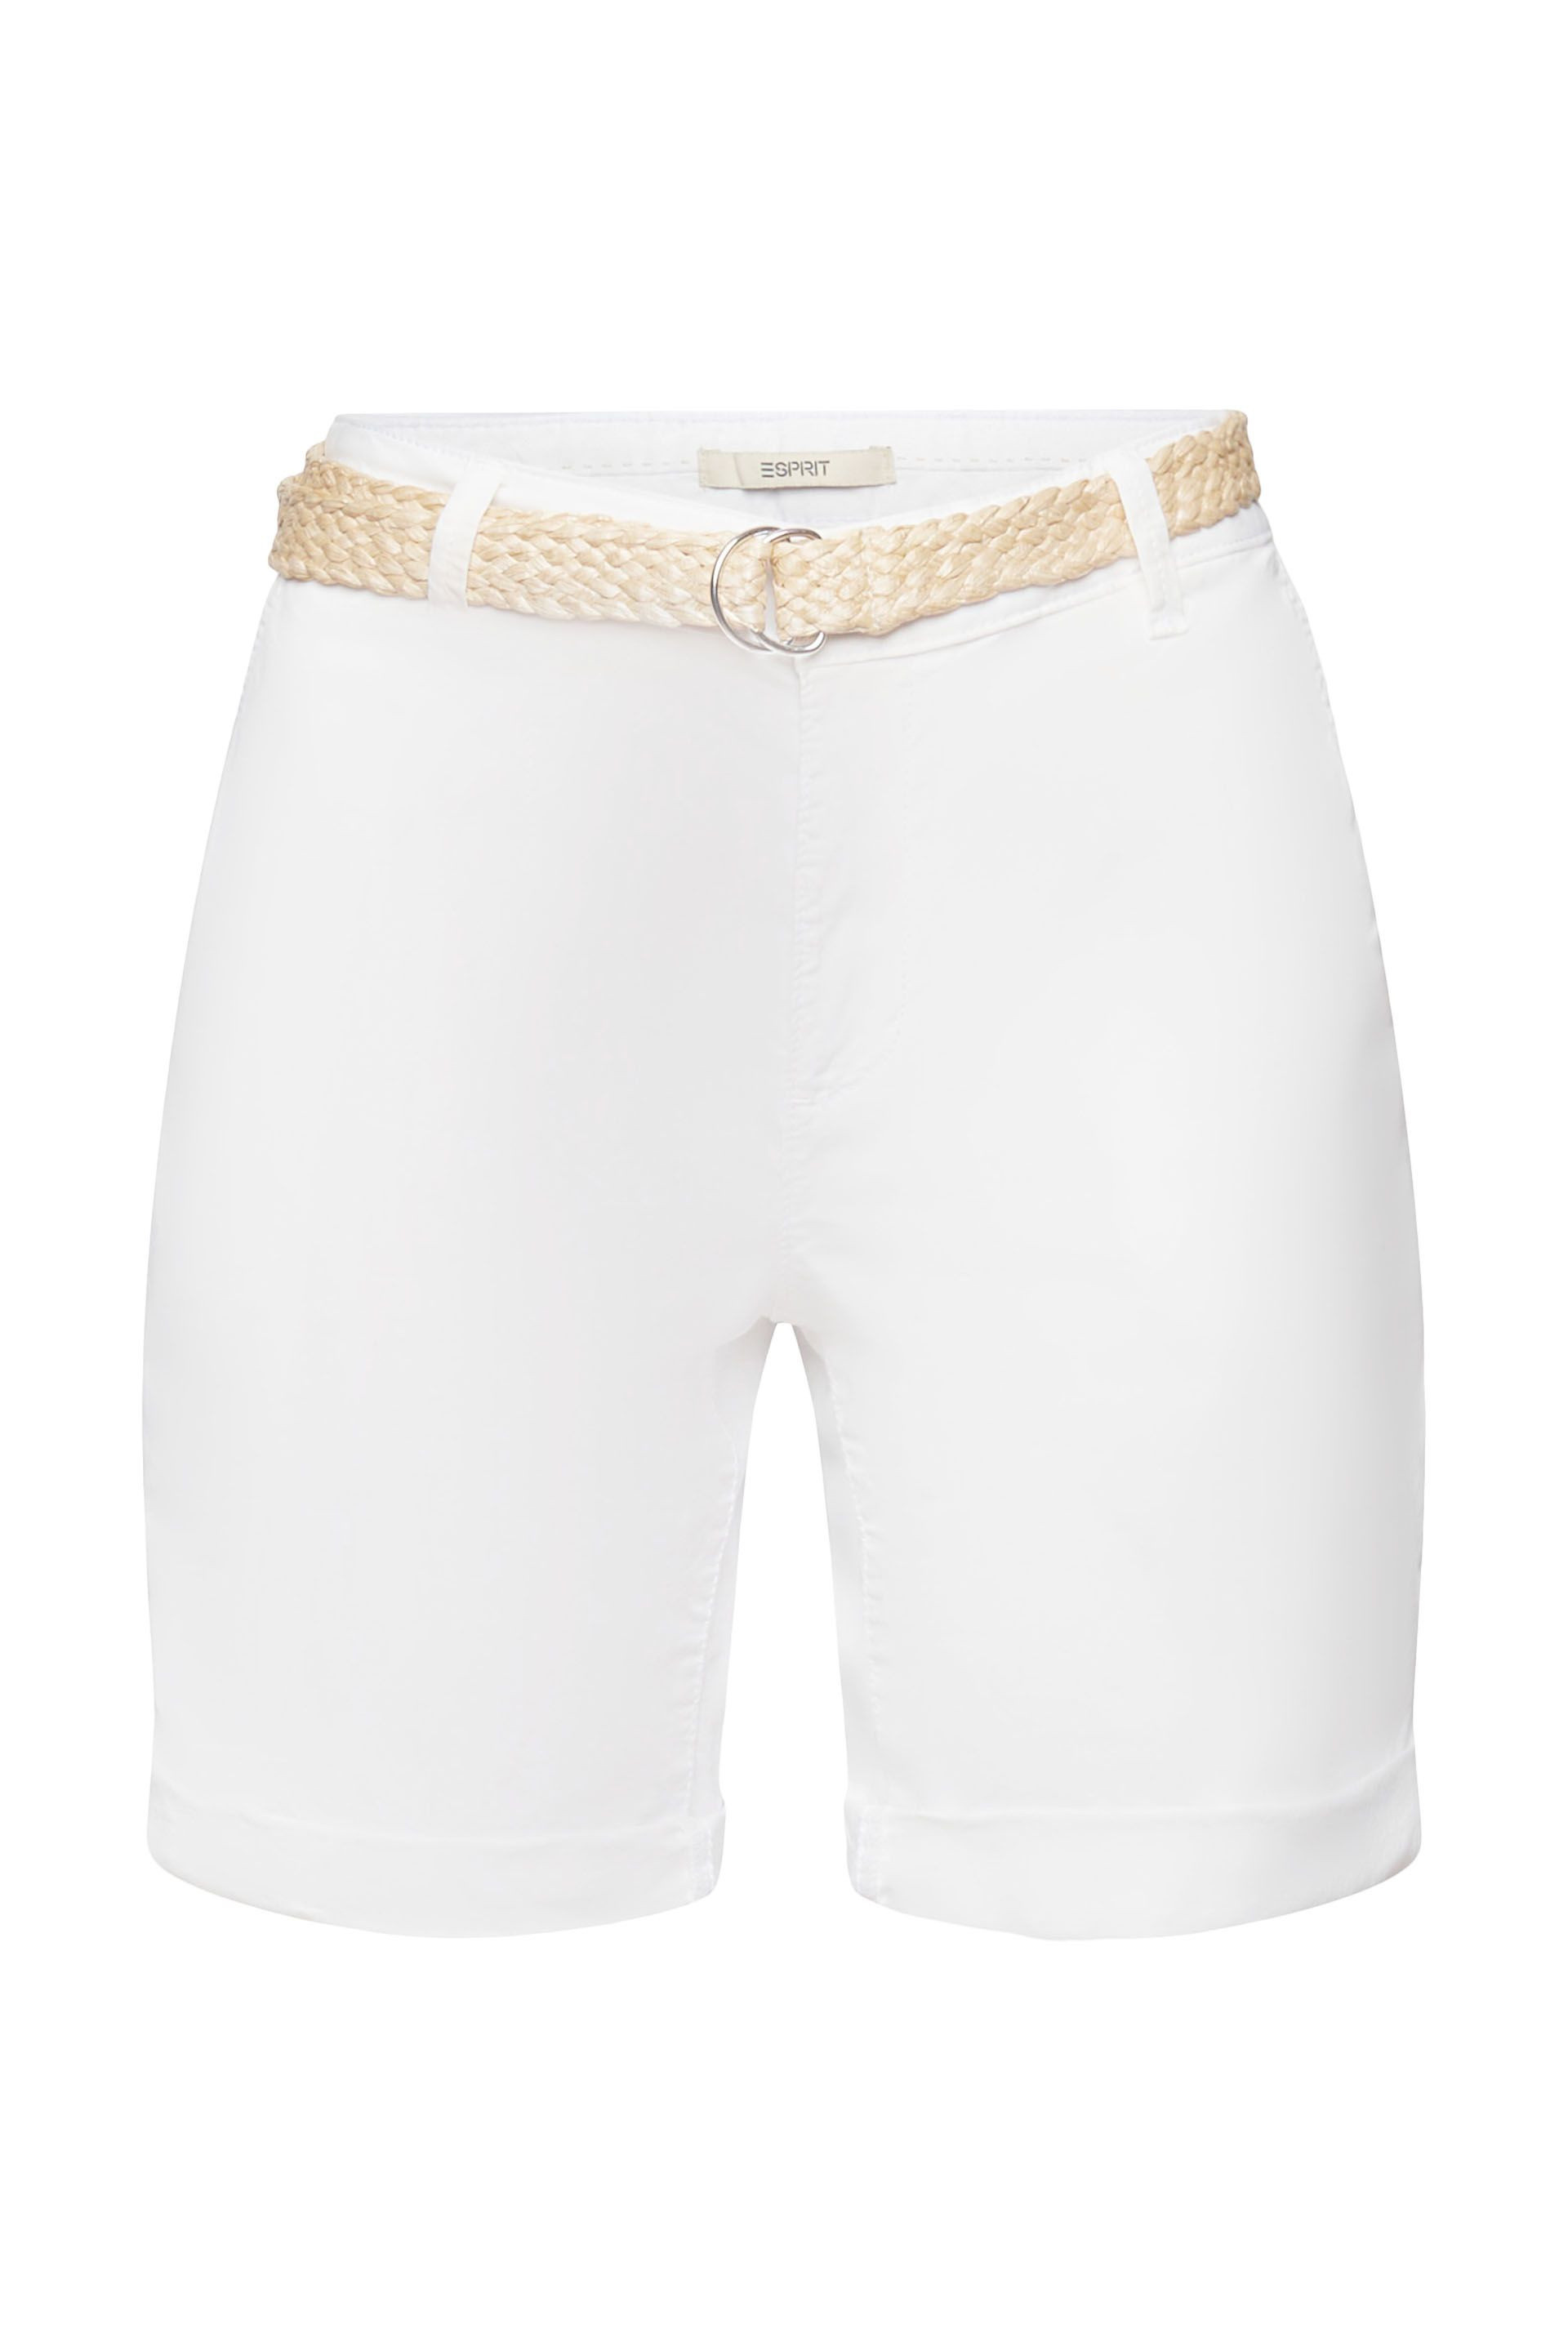 Esprit - Shorts con cintura intrecciata in rafia, Bianco, large image number 0